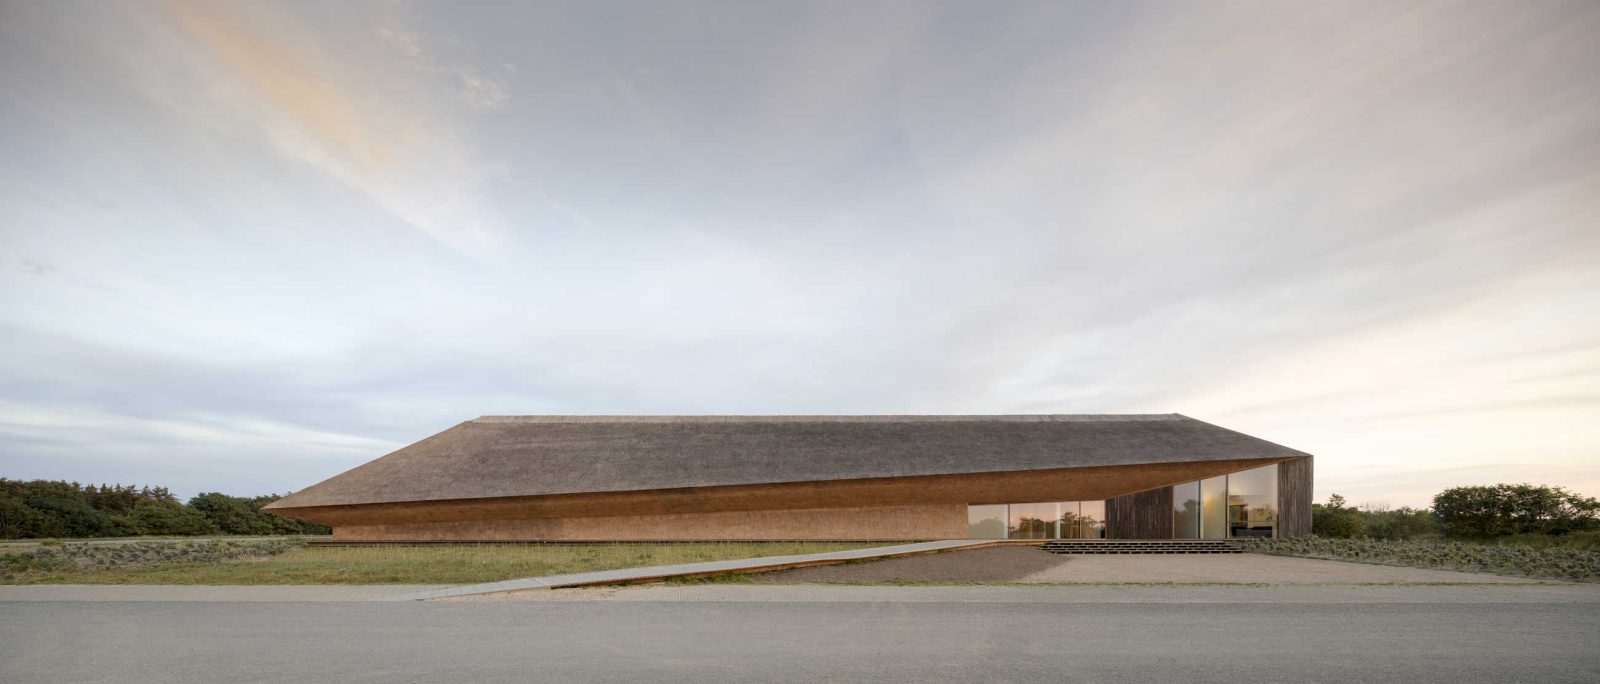 Archisearch Wadden Sea Centre by Dorte Mandrup interpretes local farmhouse typology